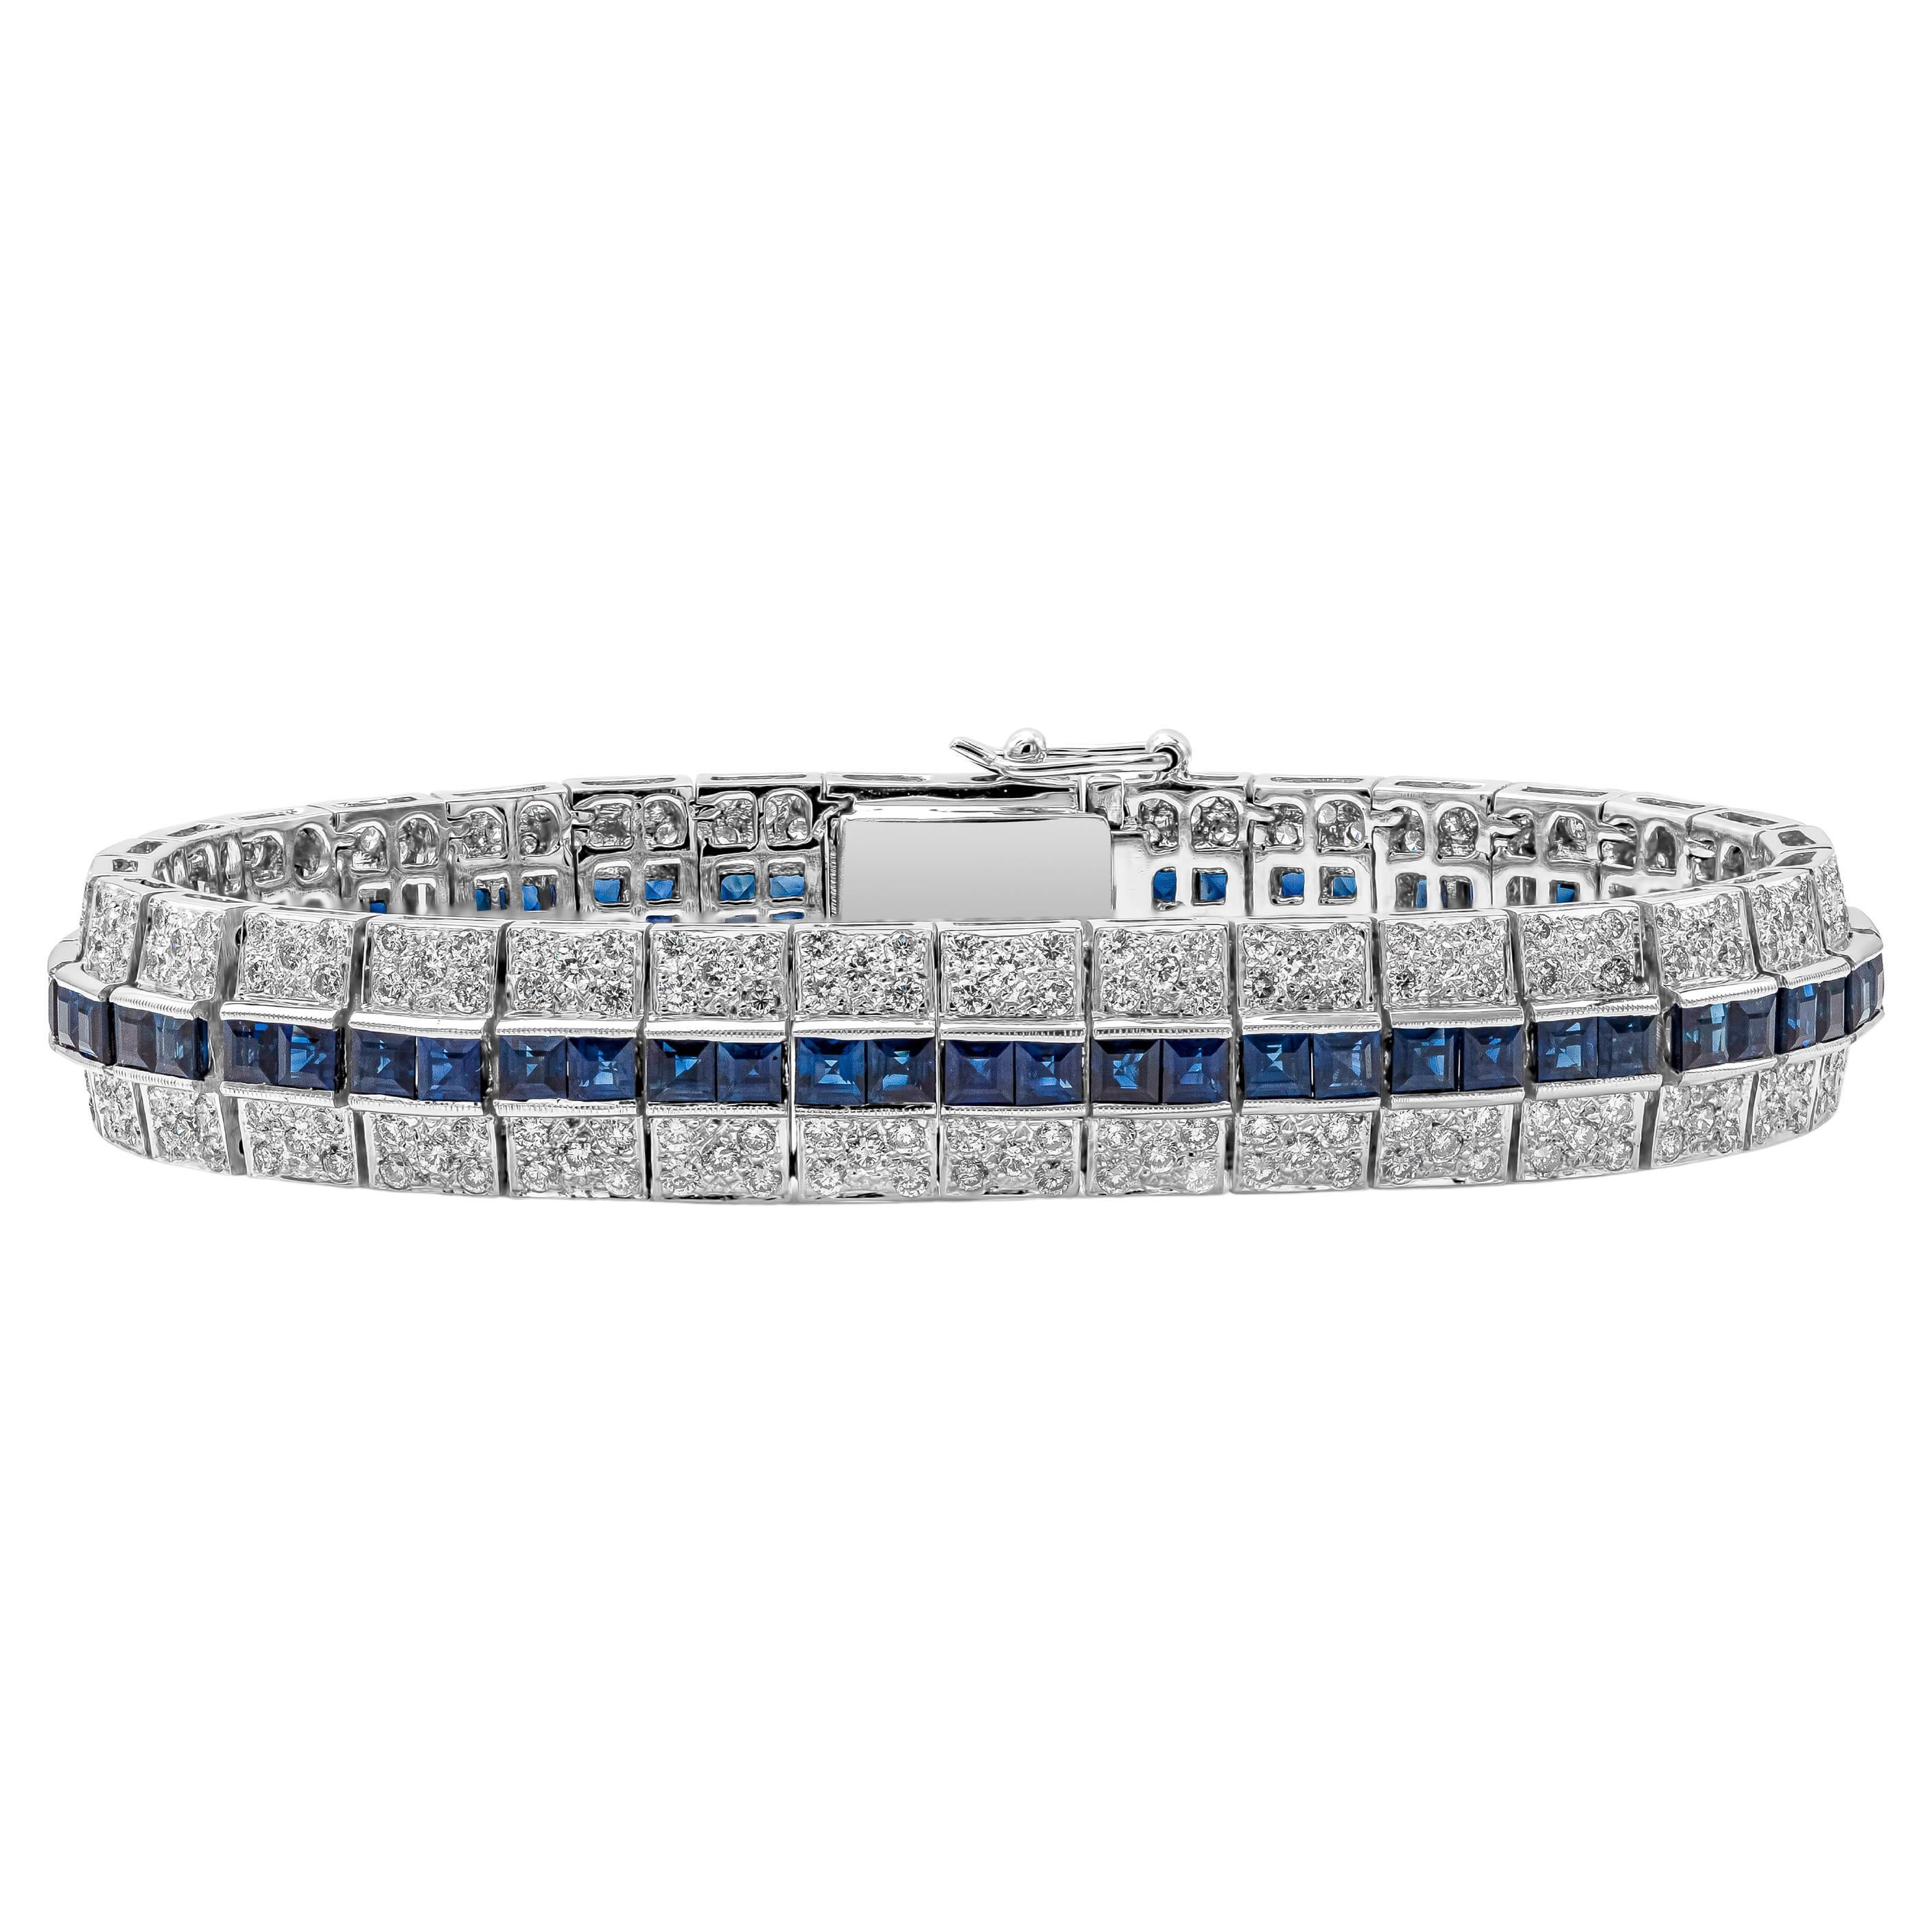 13.22 Carats Total Round Diamond and Square Cut Blue Sapphire Tennis Bracelet